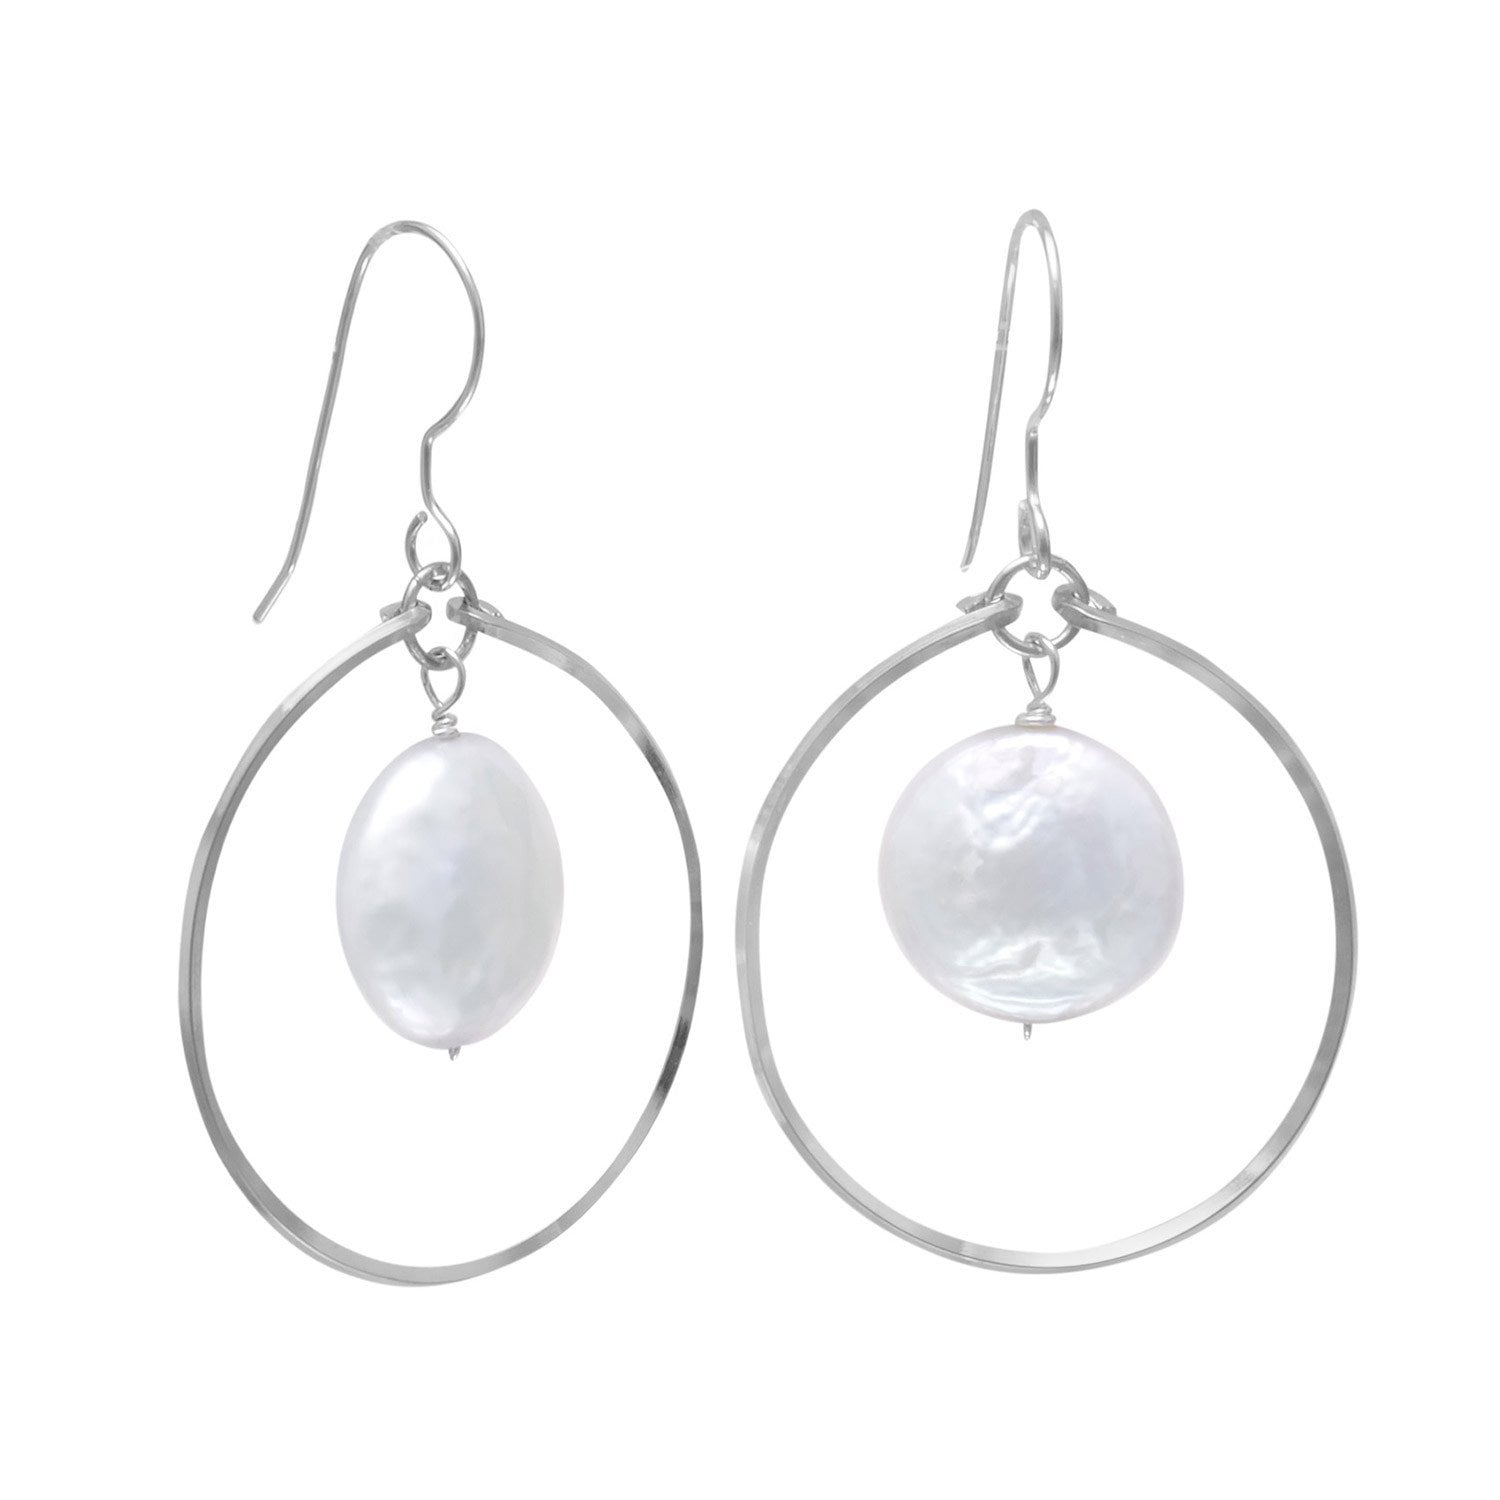 Minimalist 925 Sterling Silver Double Oval and Circle Long Drop Hookwire Drop Earrings Geometric Jewellery